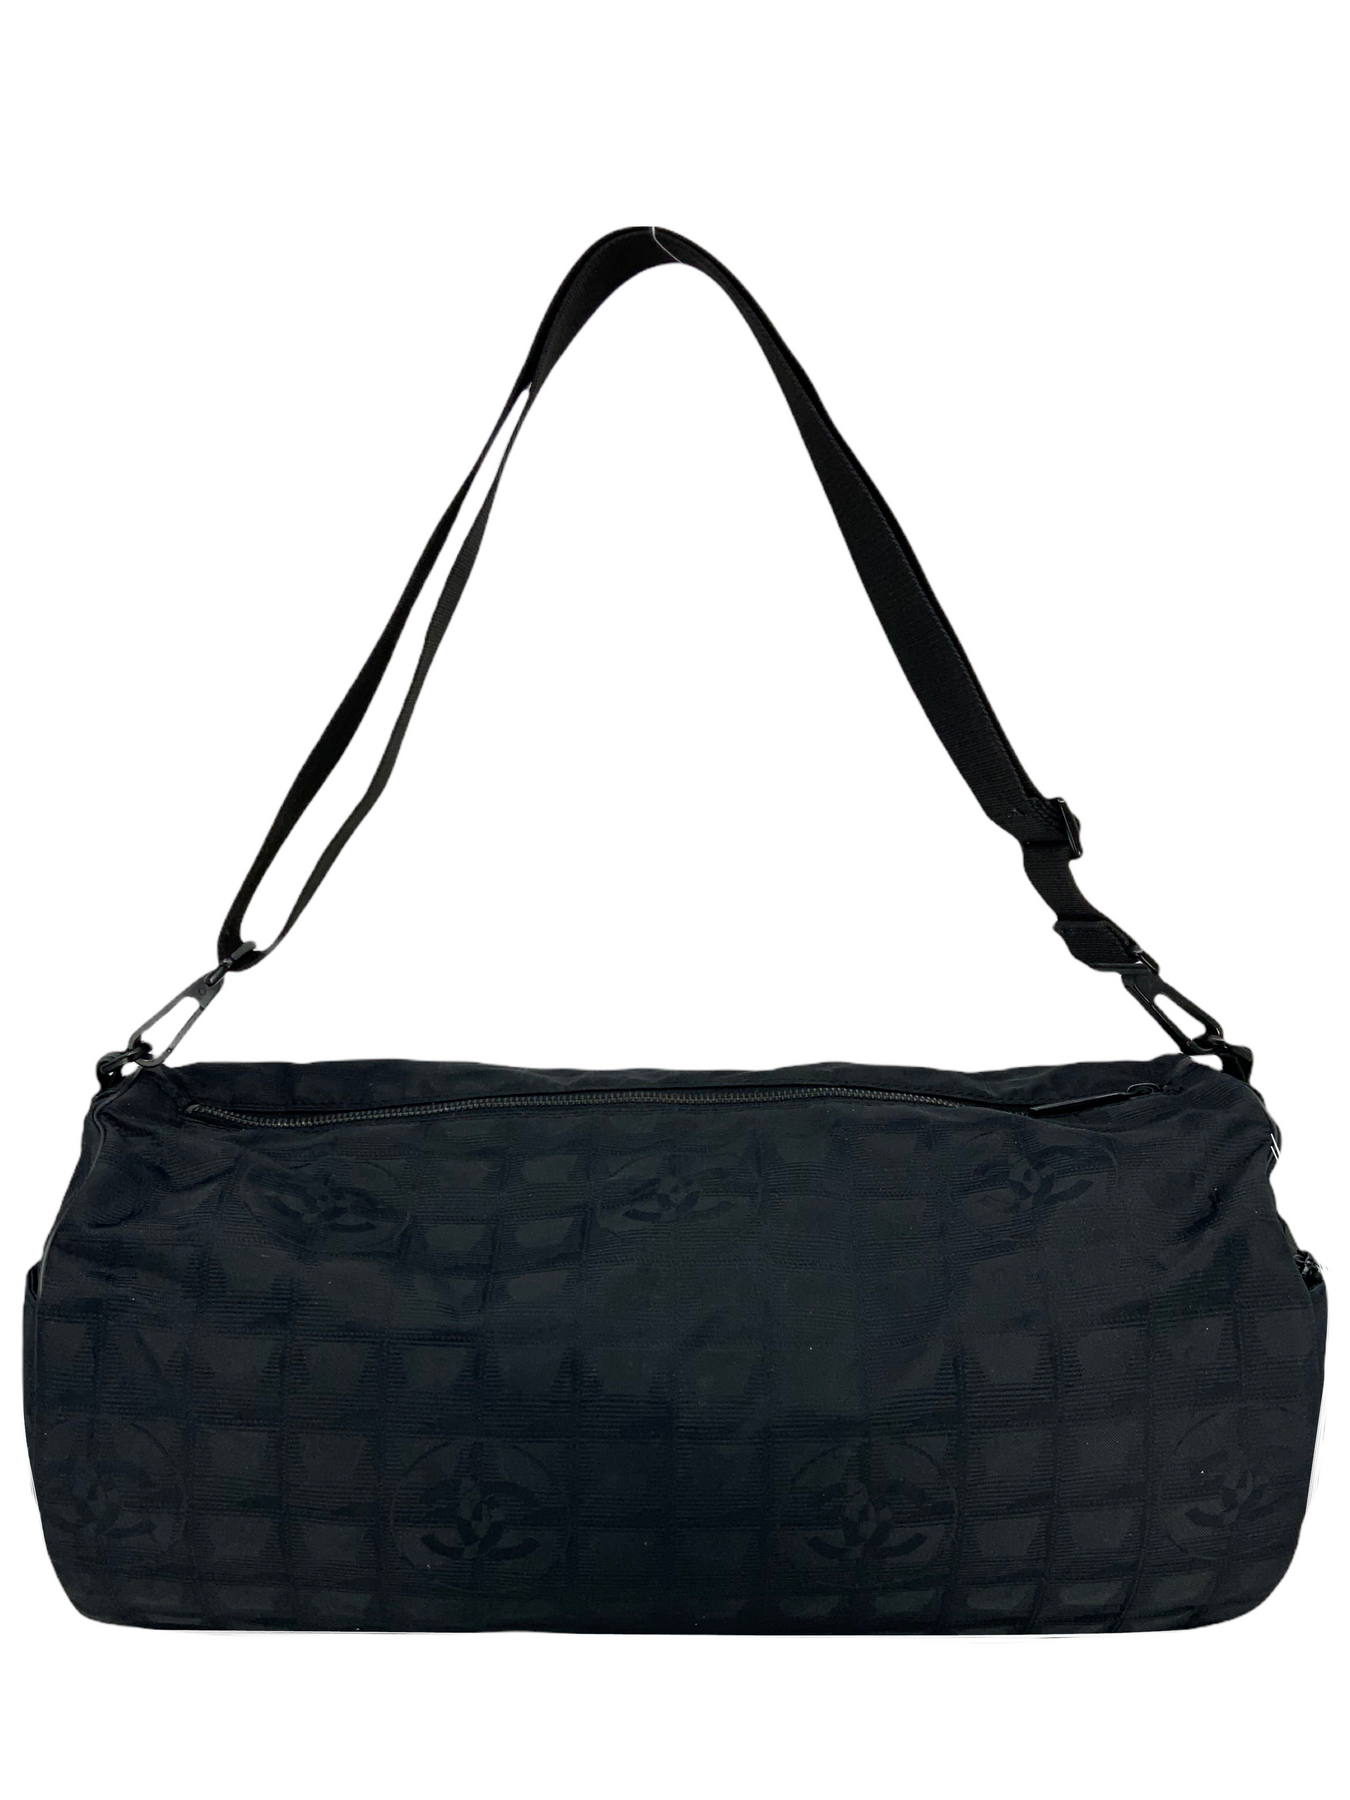 Adjustable Nylon Shoulder Bag Strap - For Louis Vuitton, Chanel